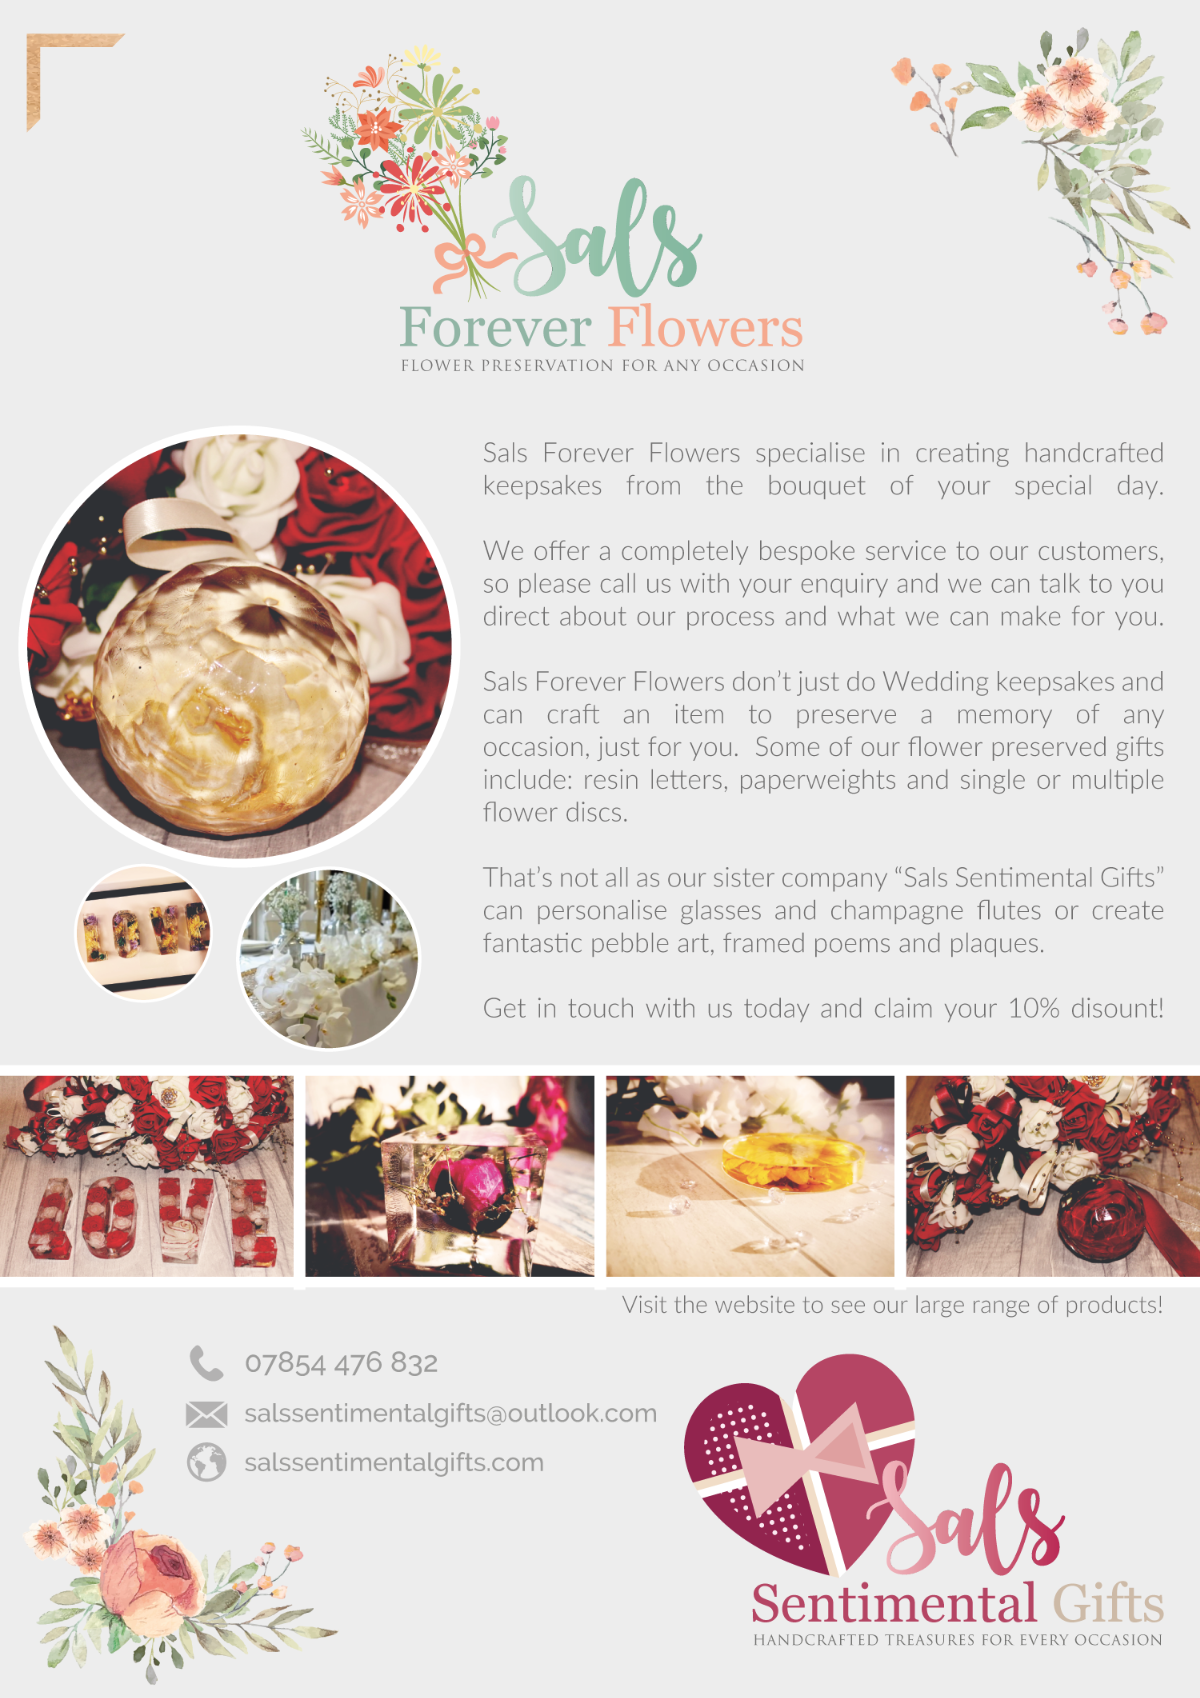 Sals Sentimental Gifts / Sals forever flowers -Image-69